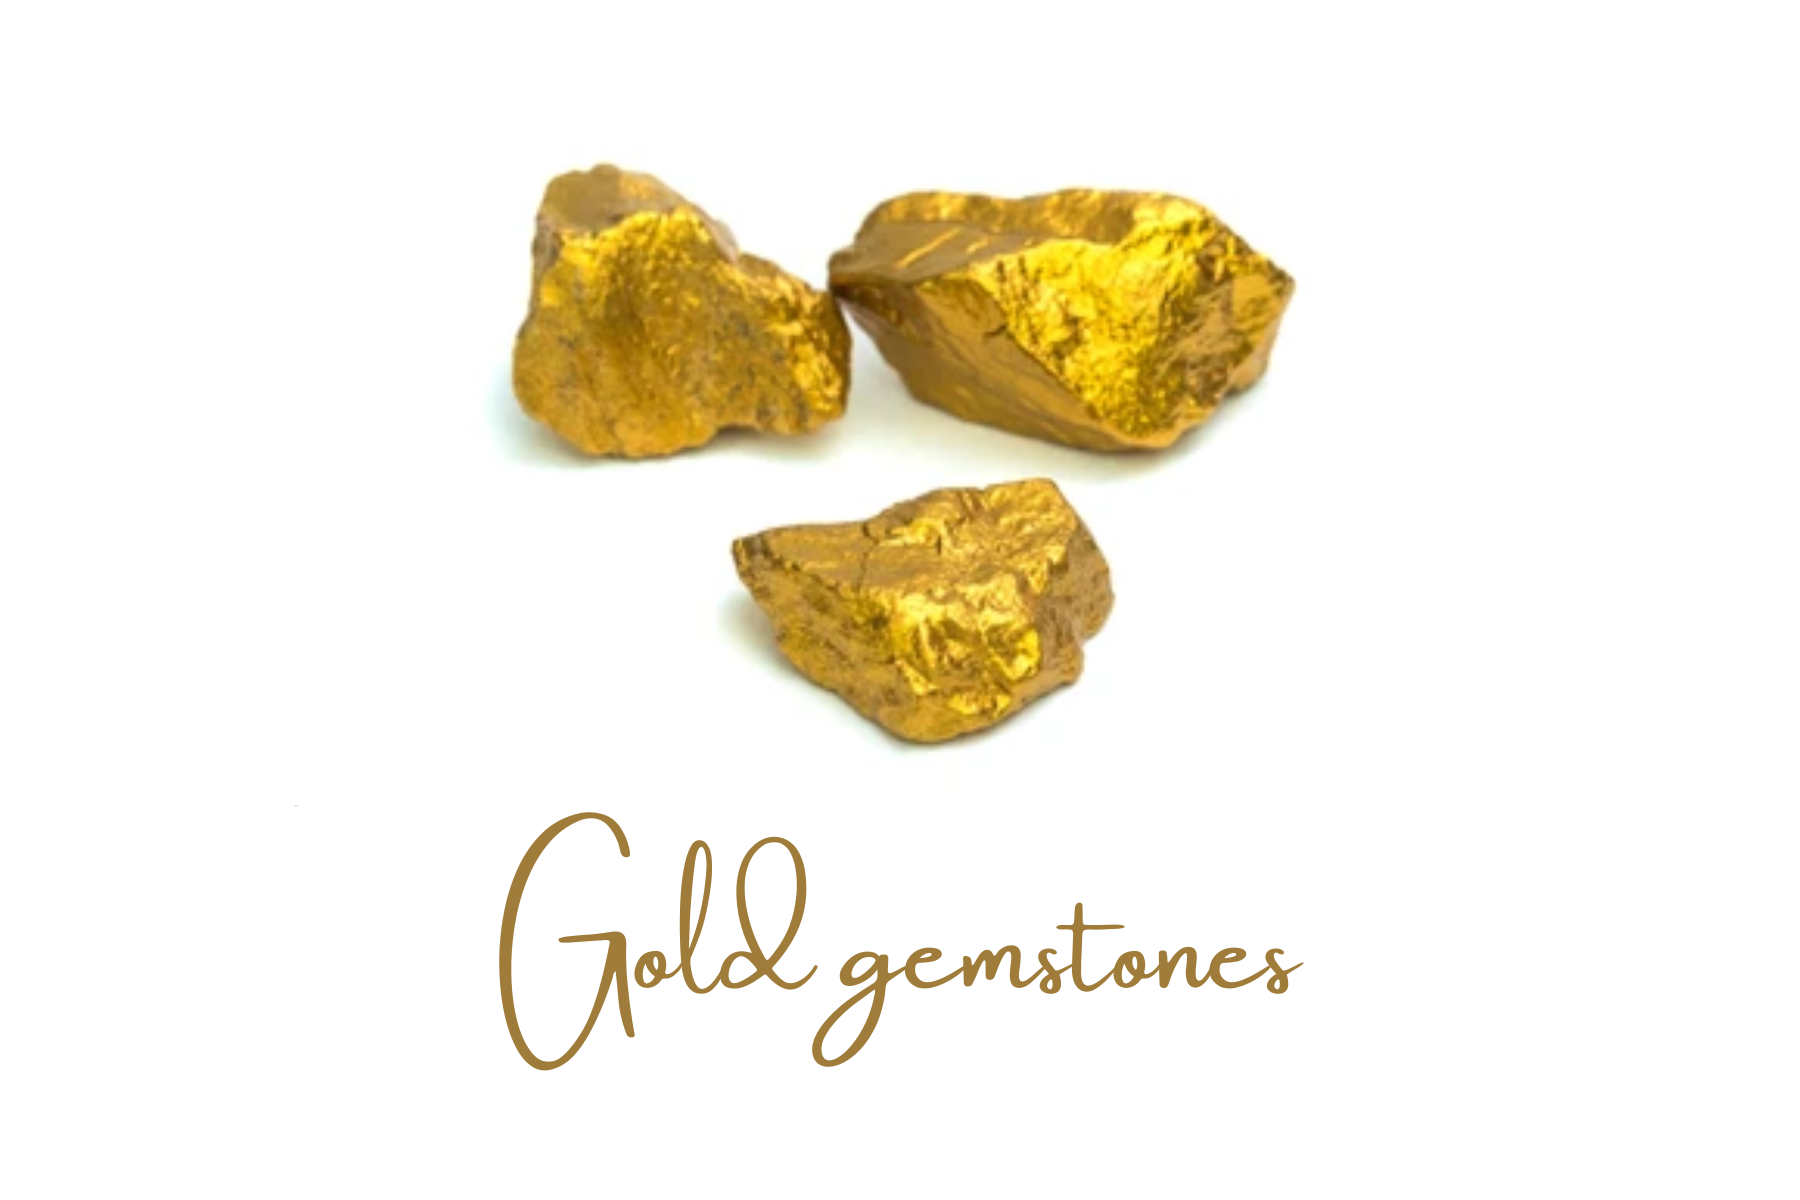 Three pieces of gold rocks